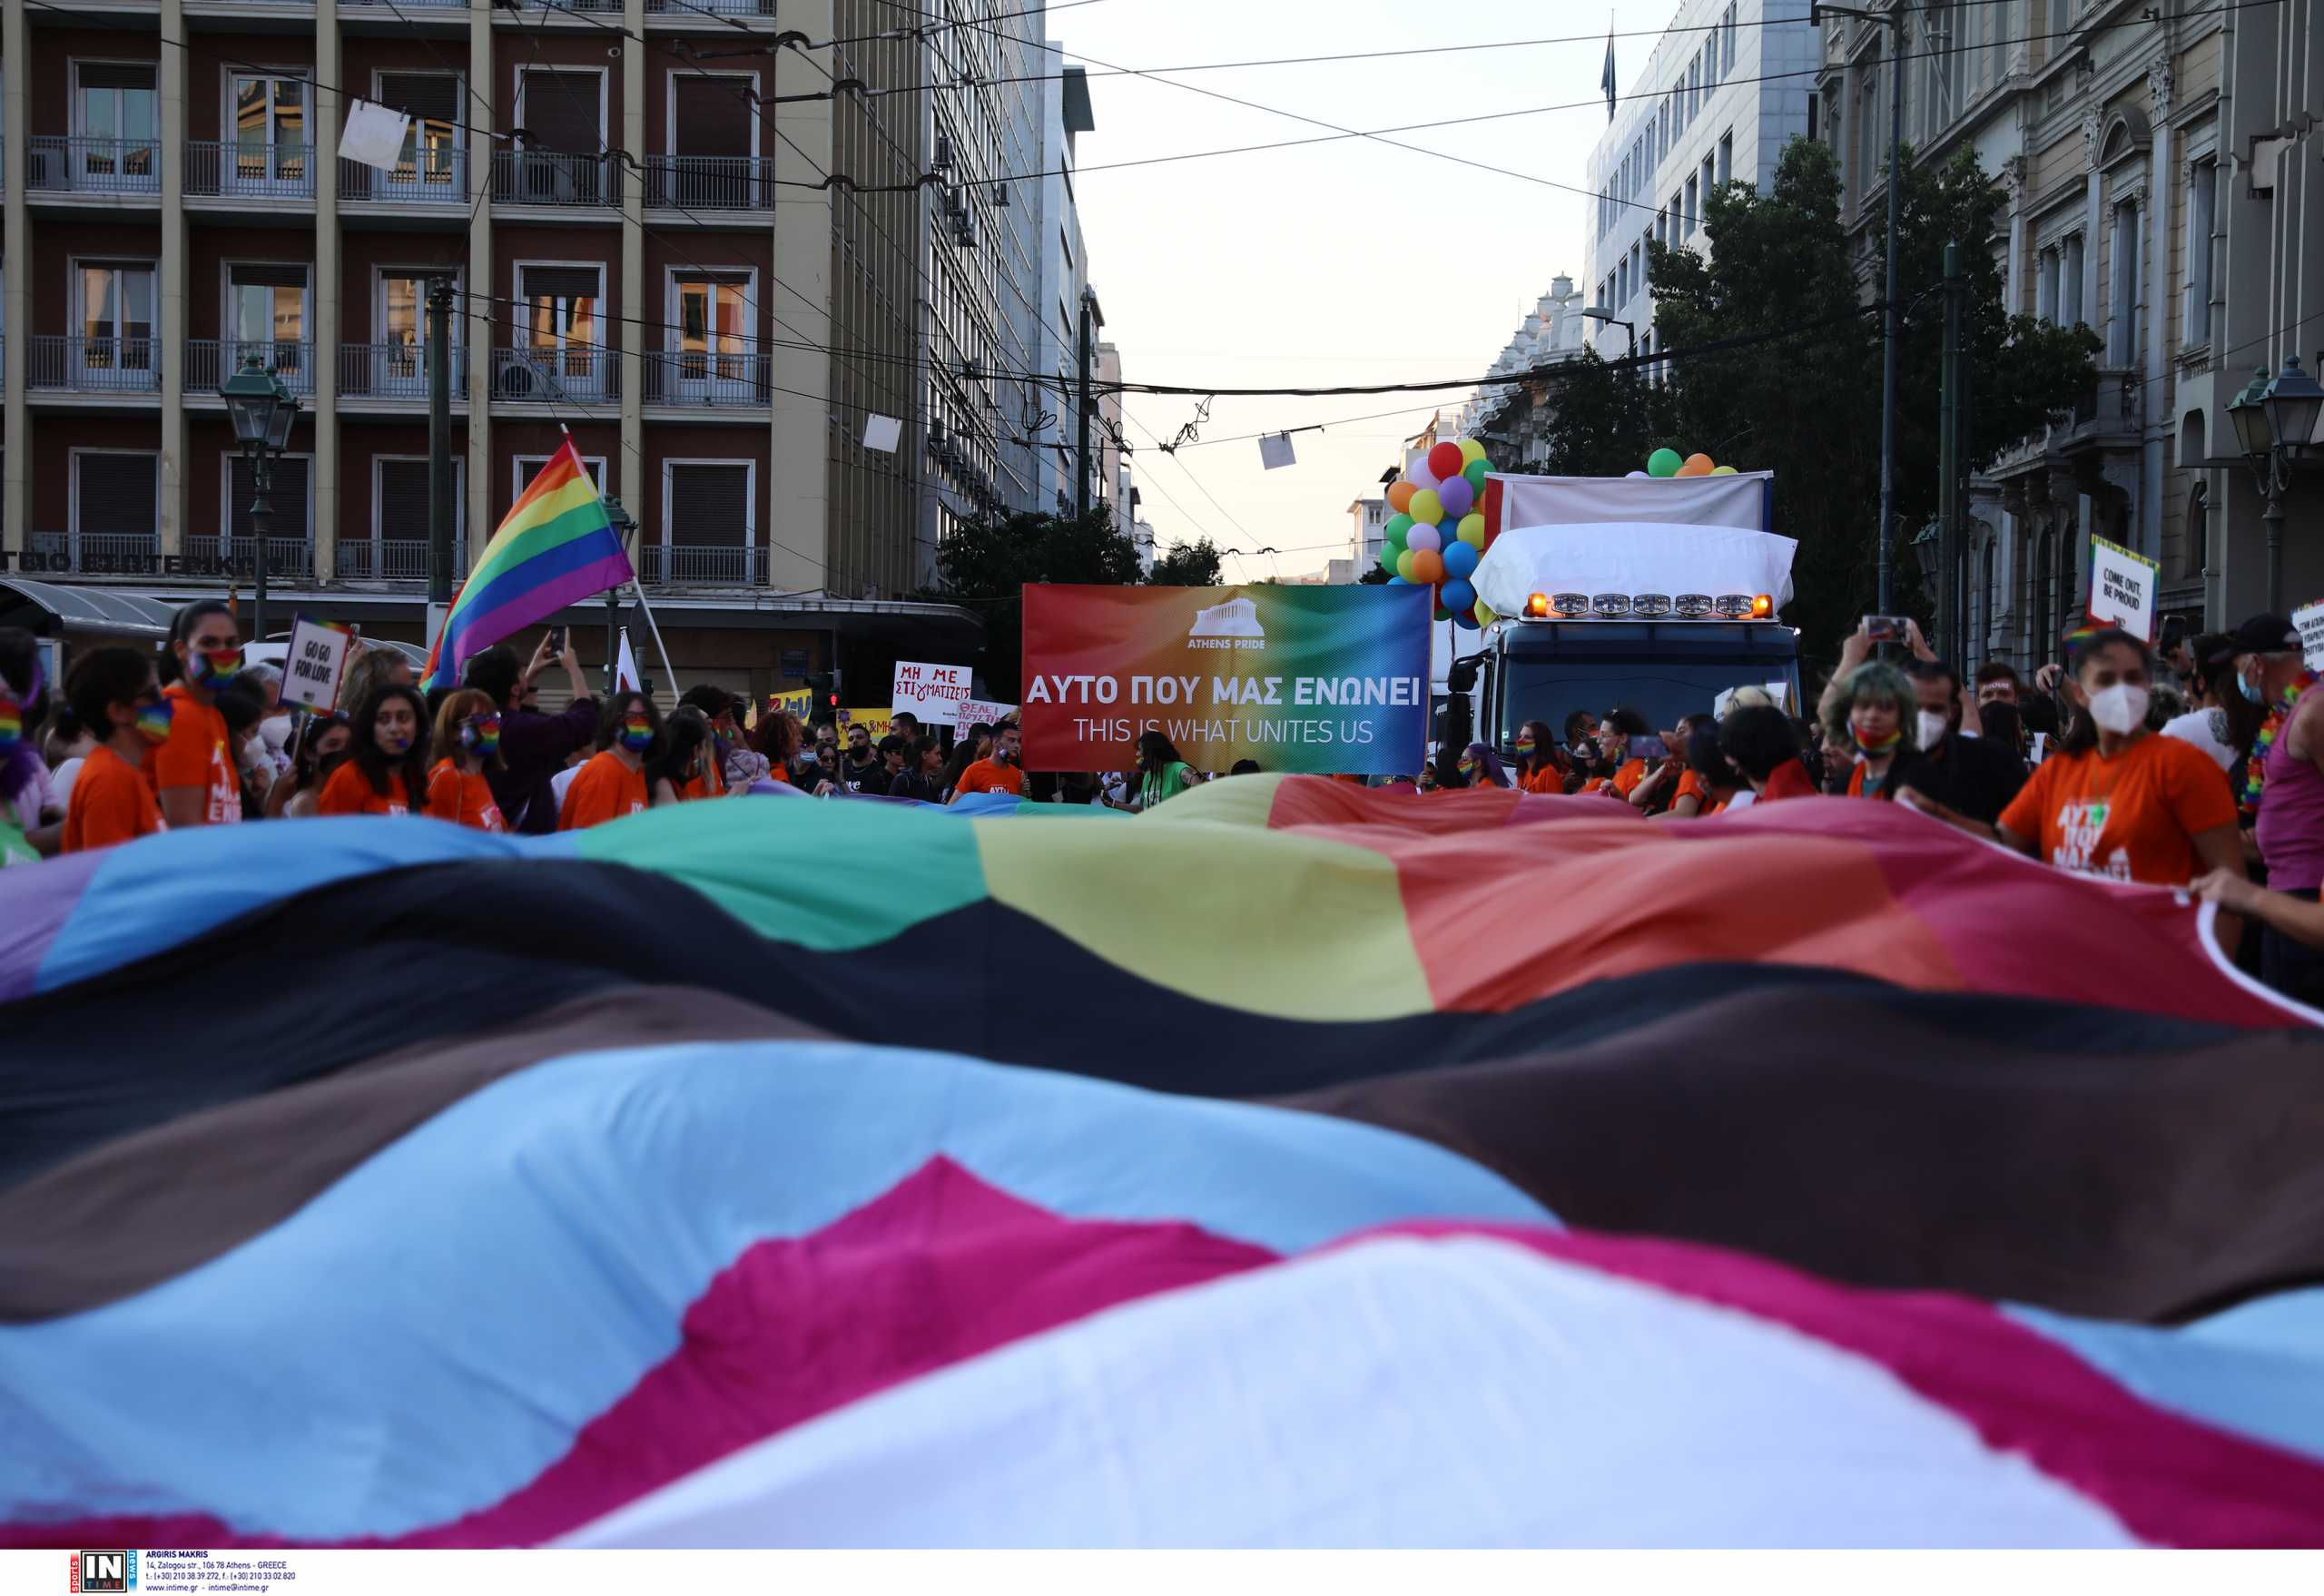 Athens Pride 2021: Γέμισε χρώμα το κέντρο της Αθήνας – «Αυτό που μας ενώνει»